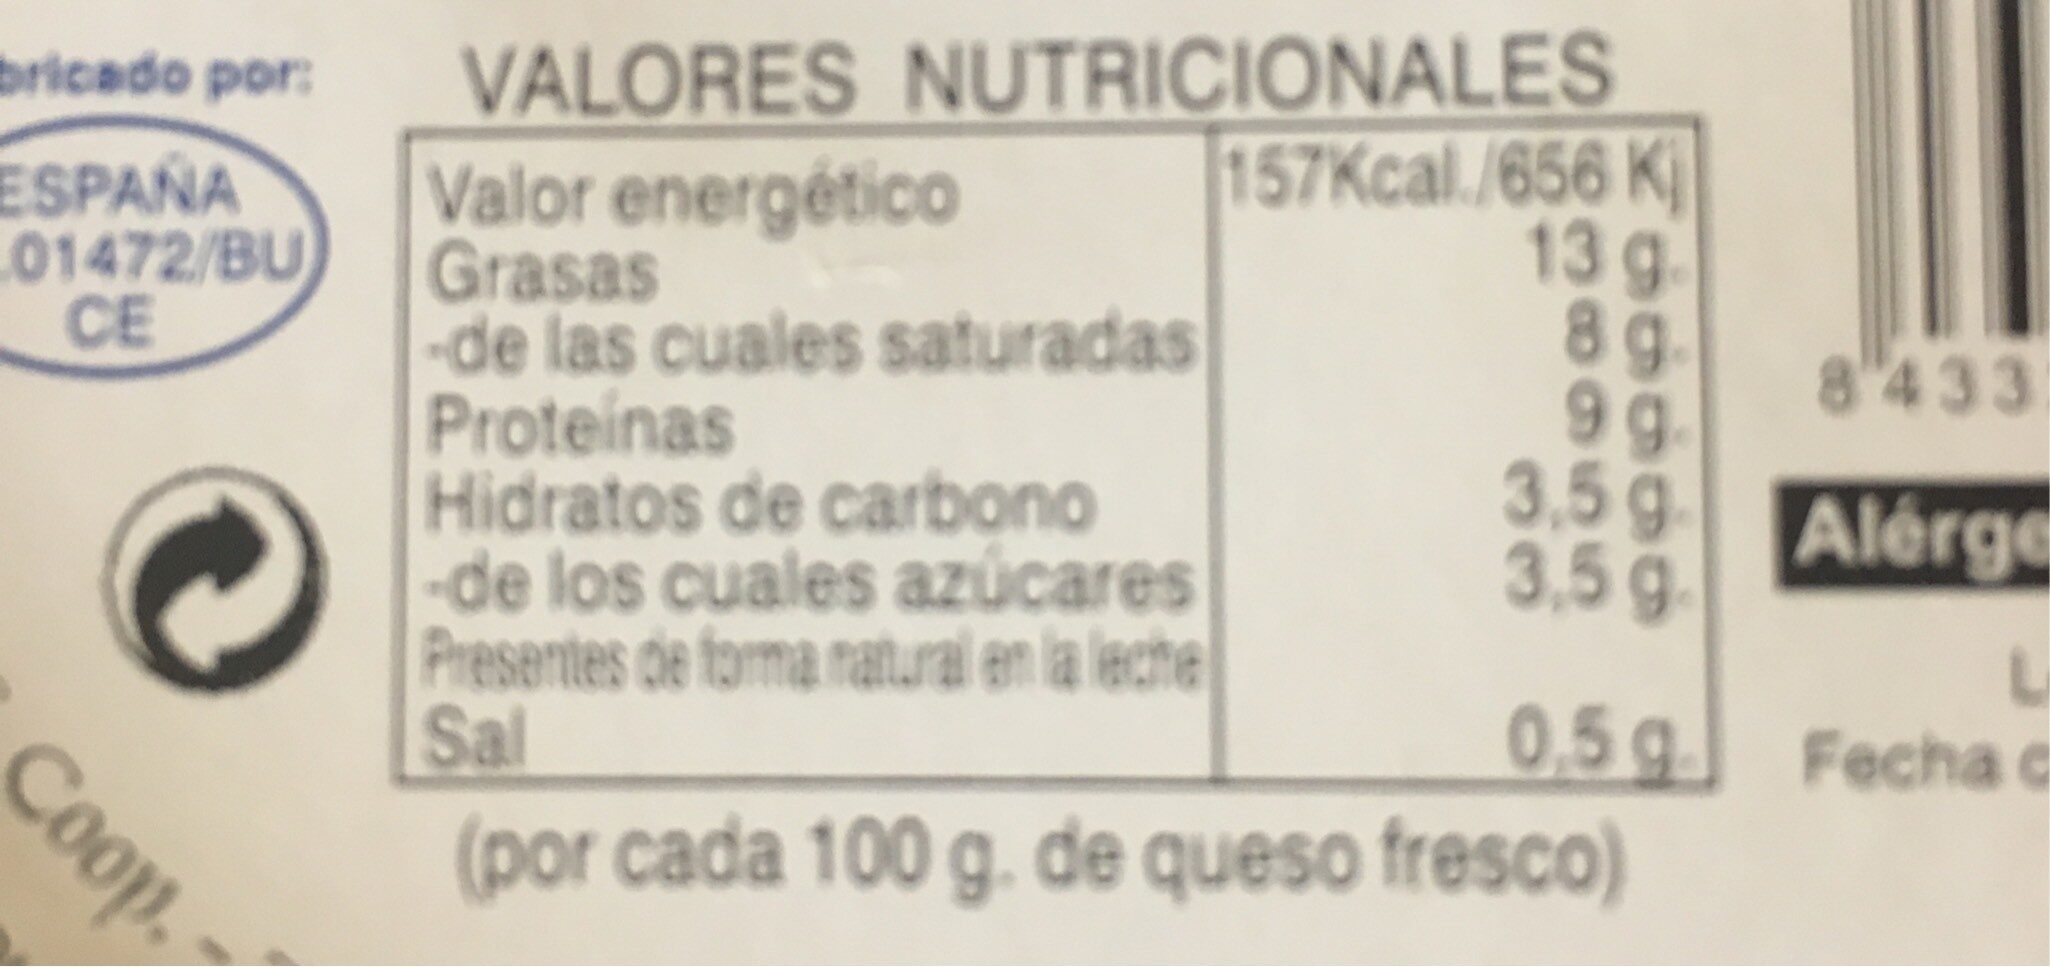 Queso fresco - Nutrition facts - es